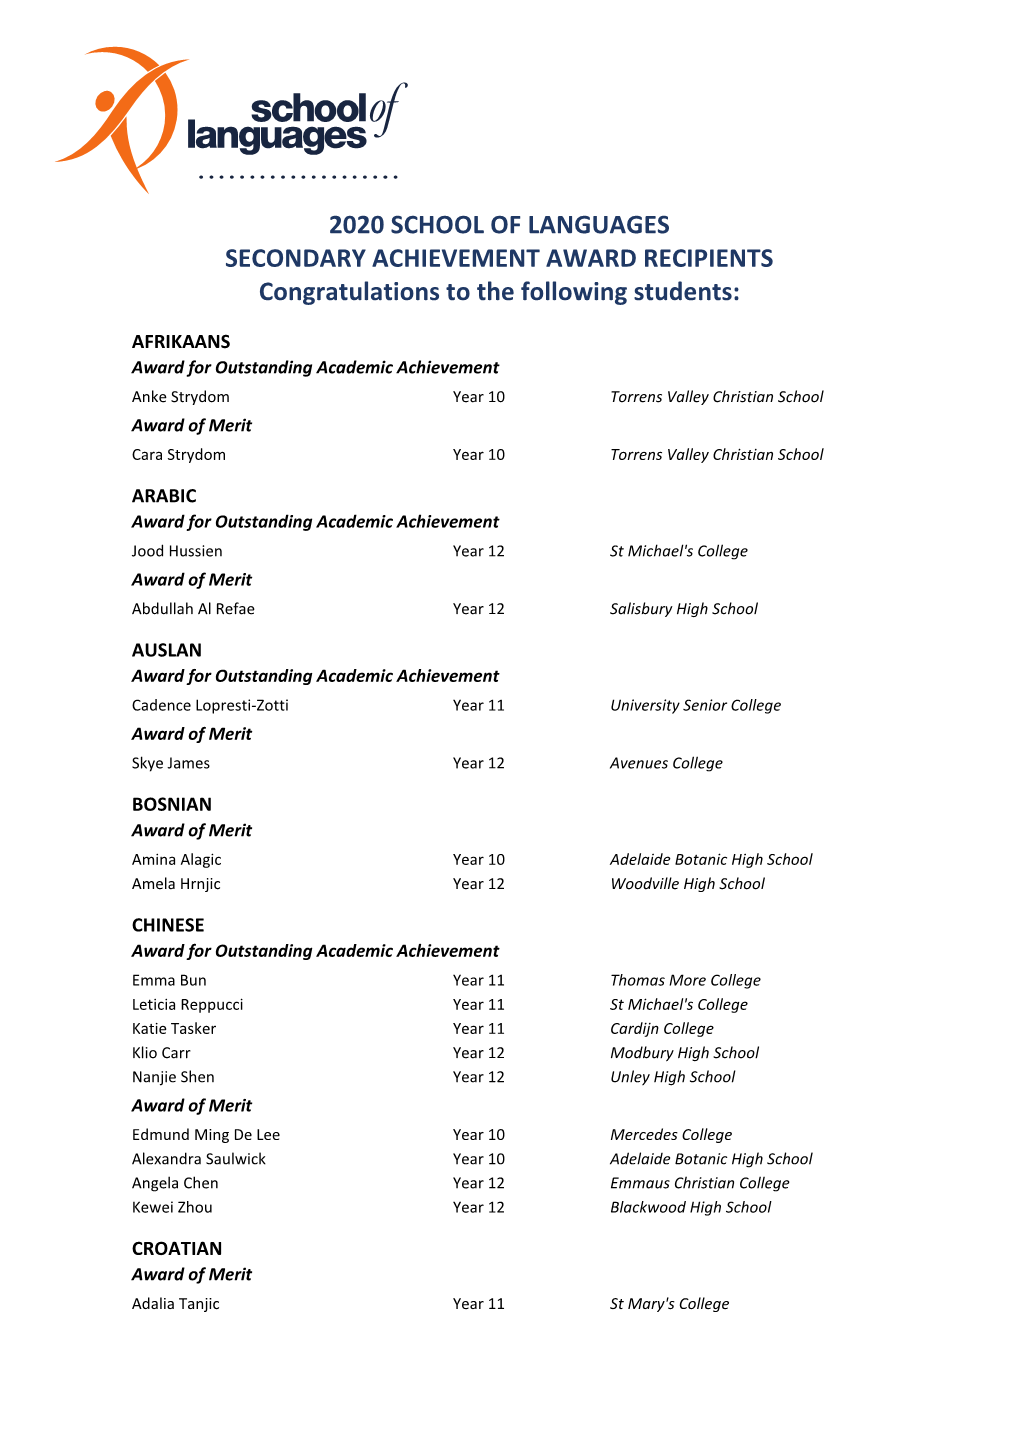 Secondary Outstanding Academic Achievement/Merit Award